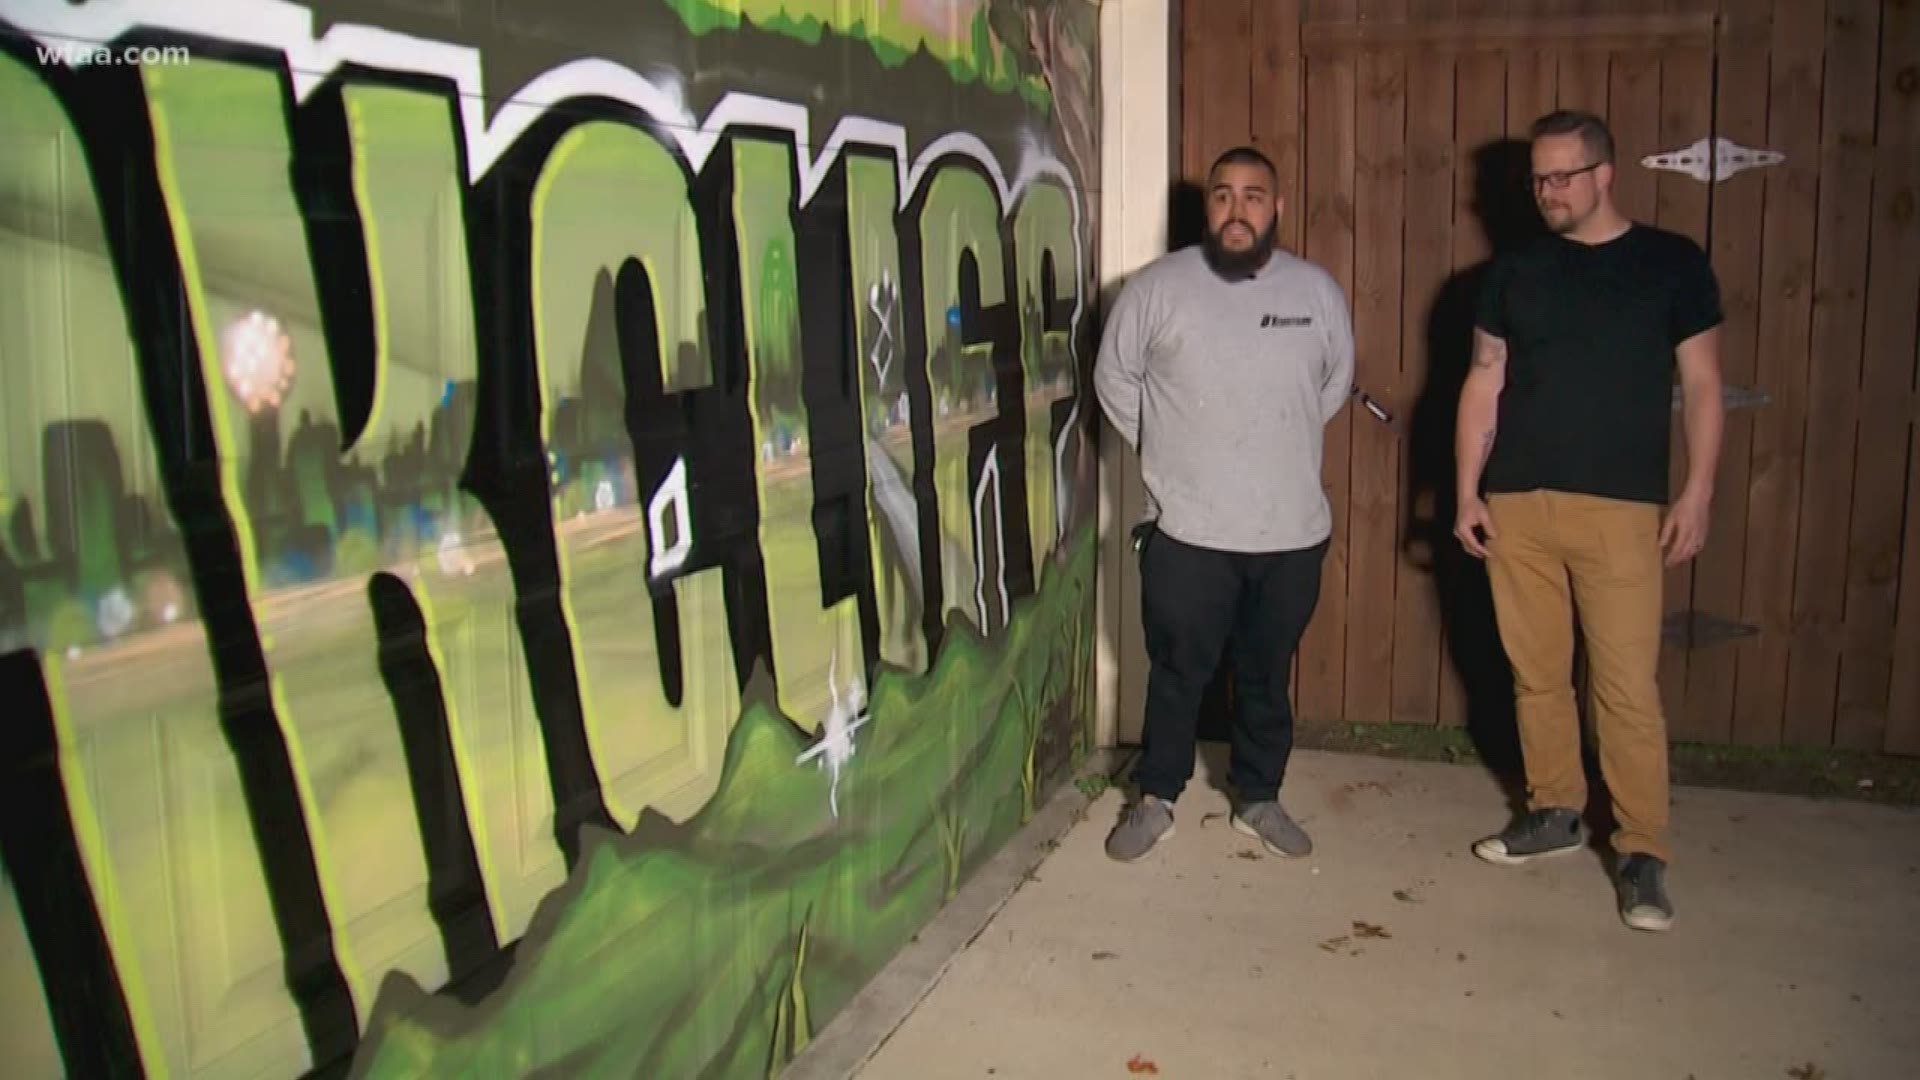 Graffiti artist transforms vandalized door